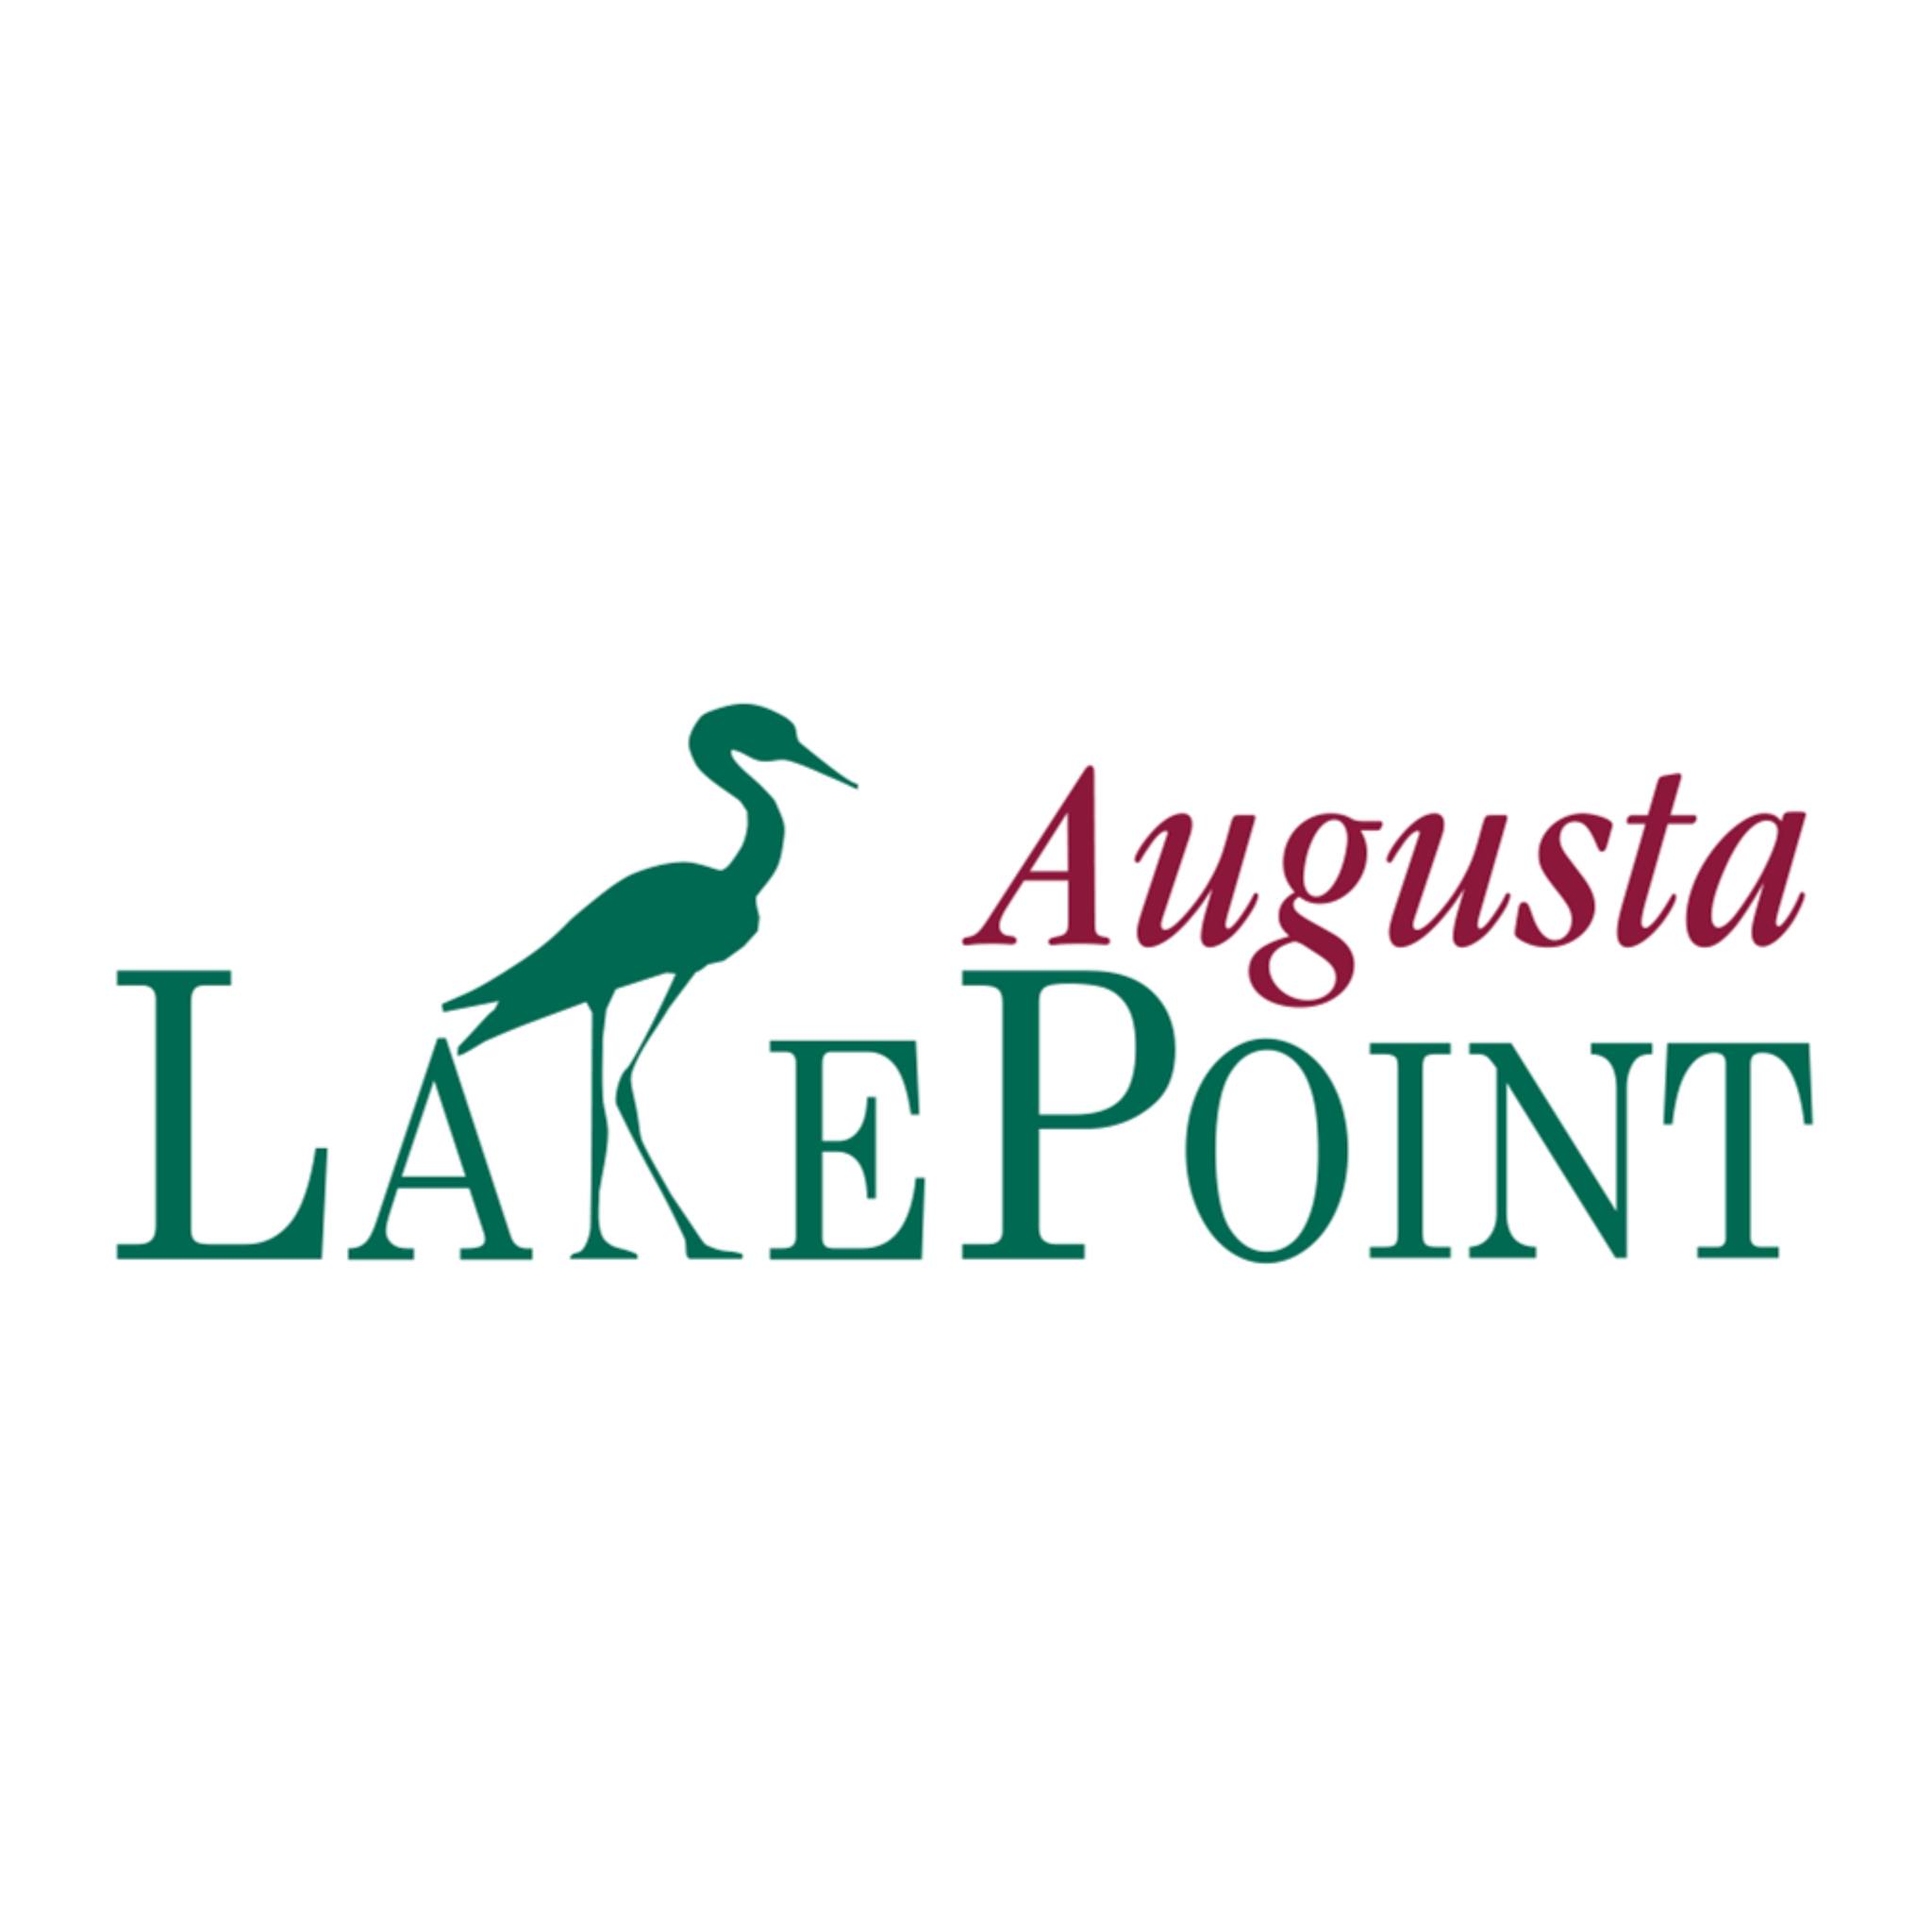 LakePoint Augusta 